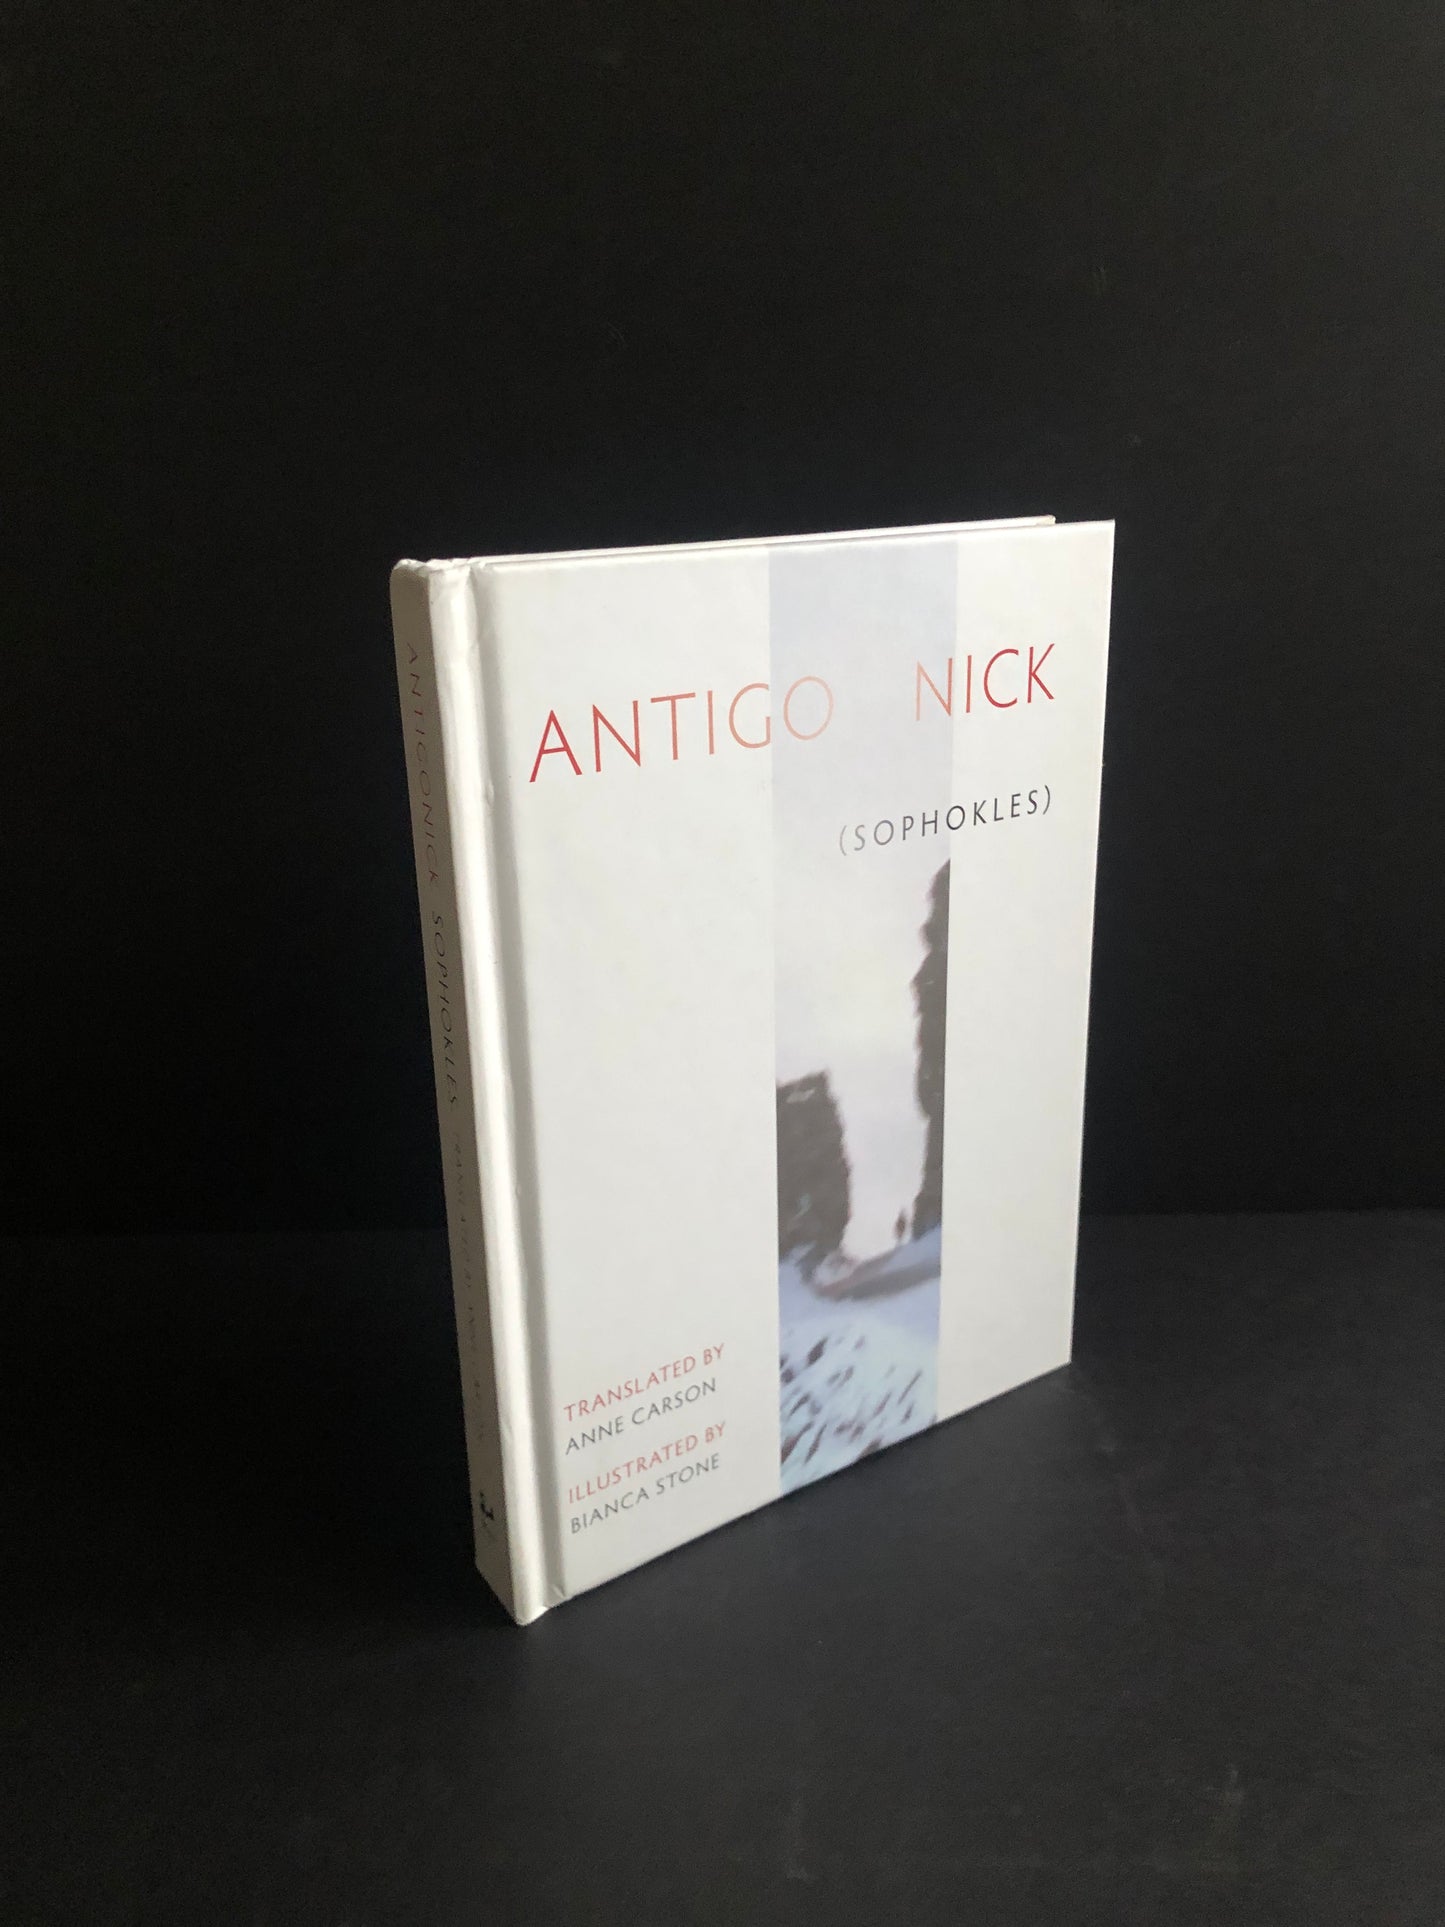 Antigonick (First Edition)